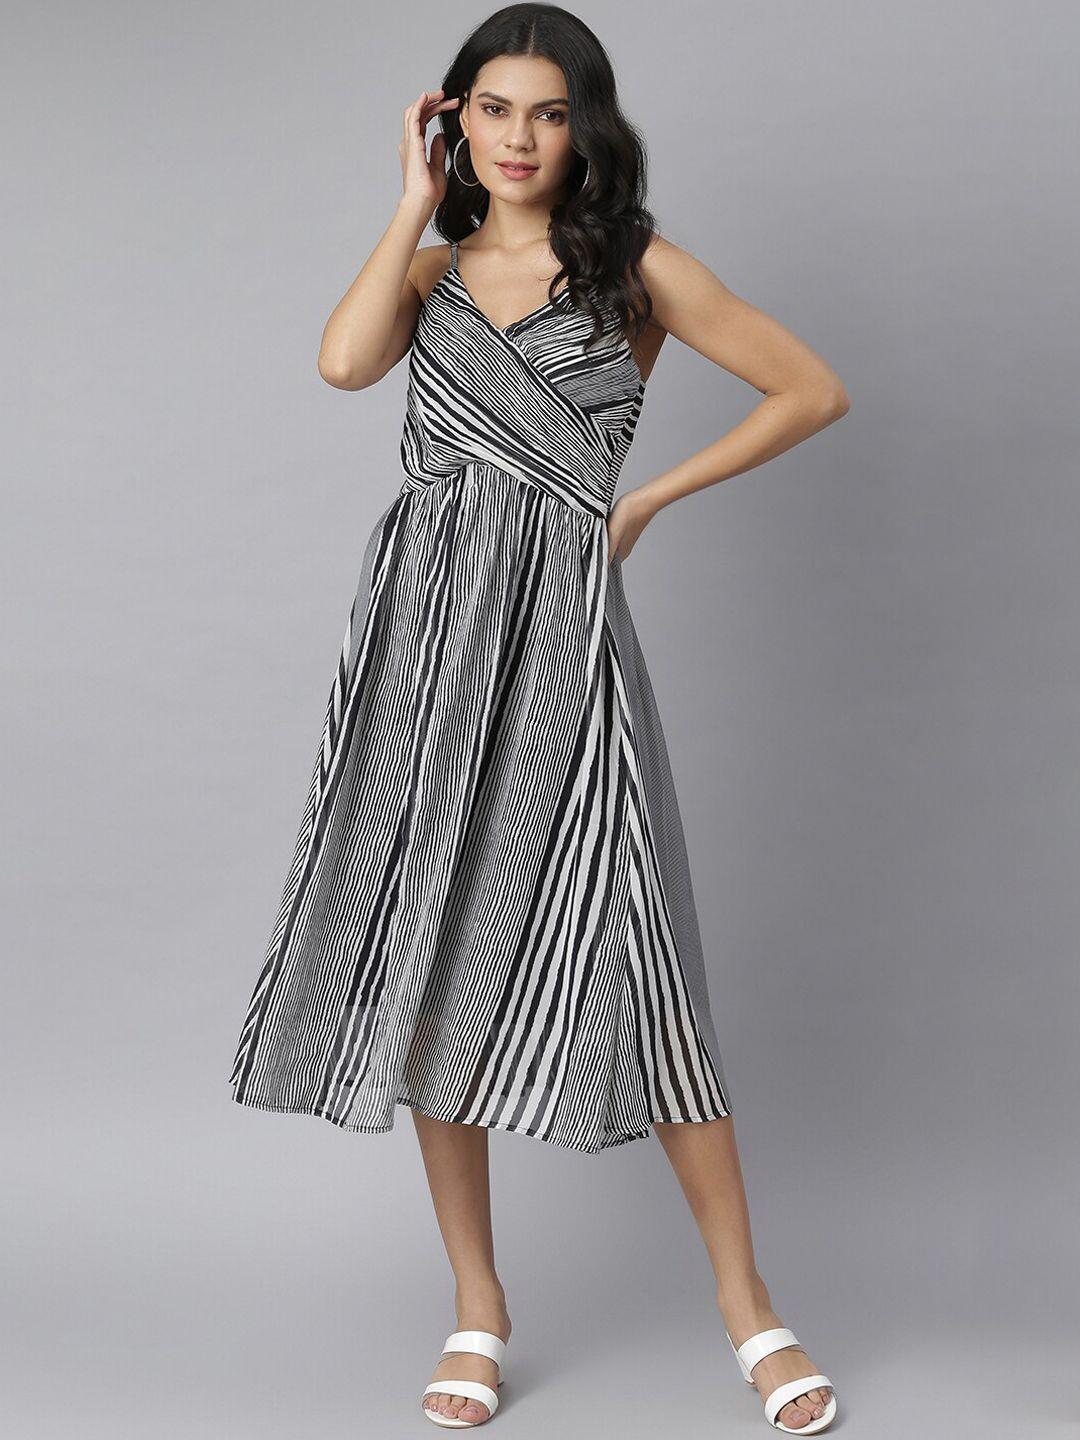 kassually-women-white-&-black-striped-georgette-midi-dress